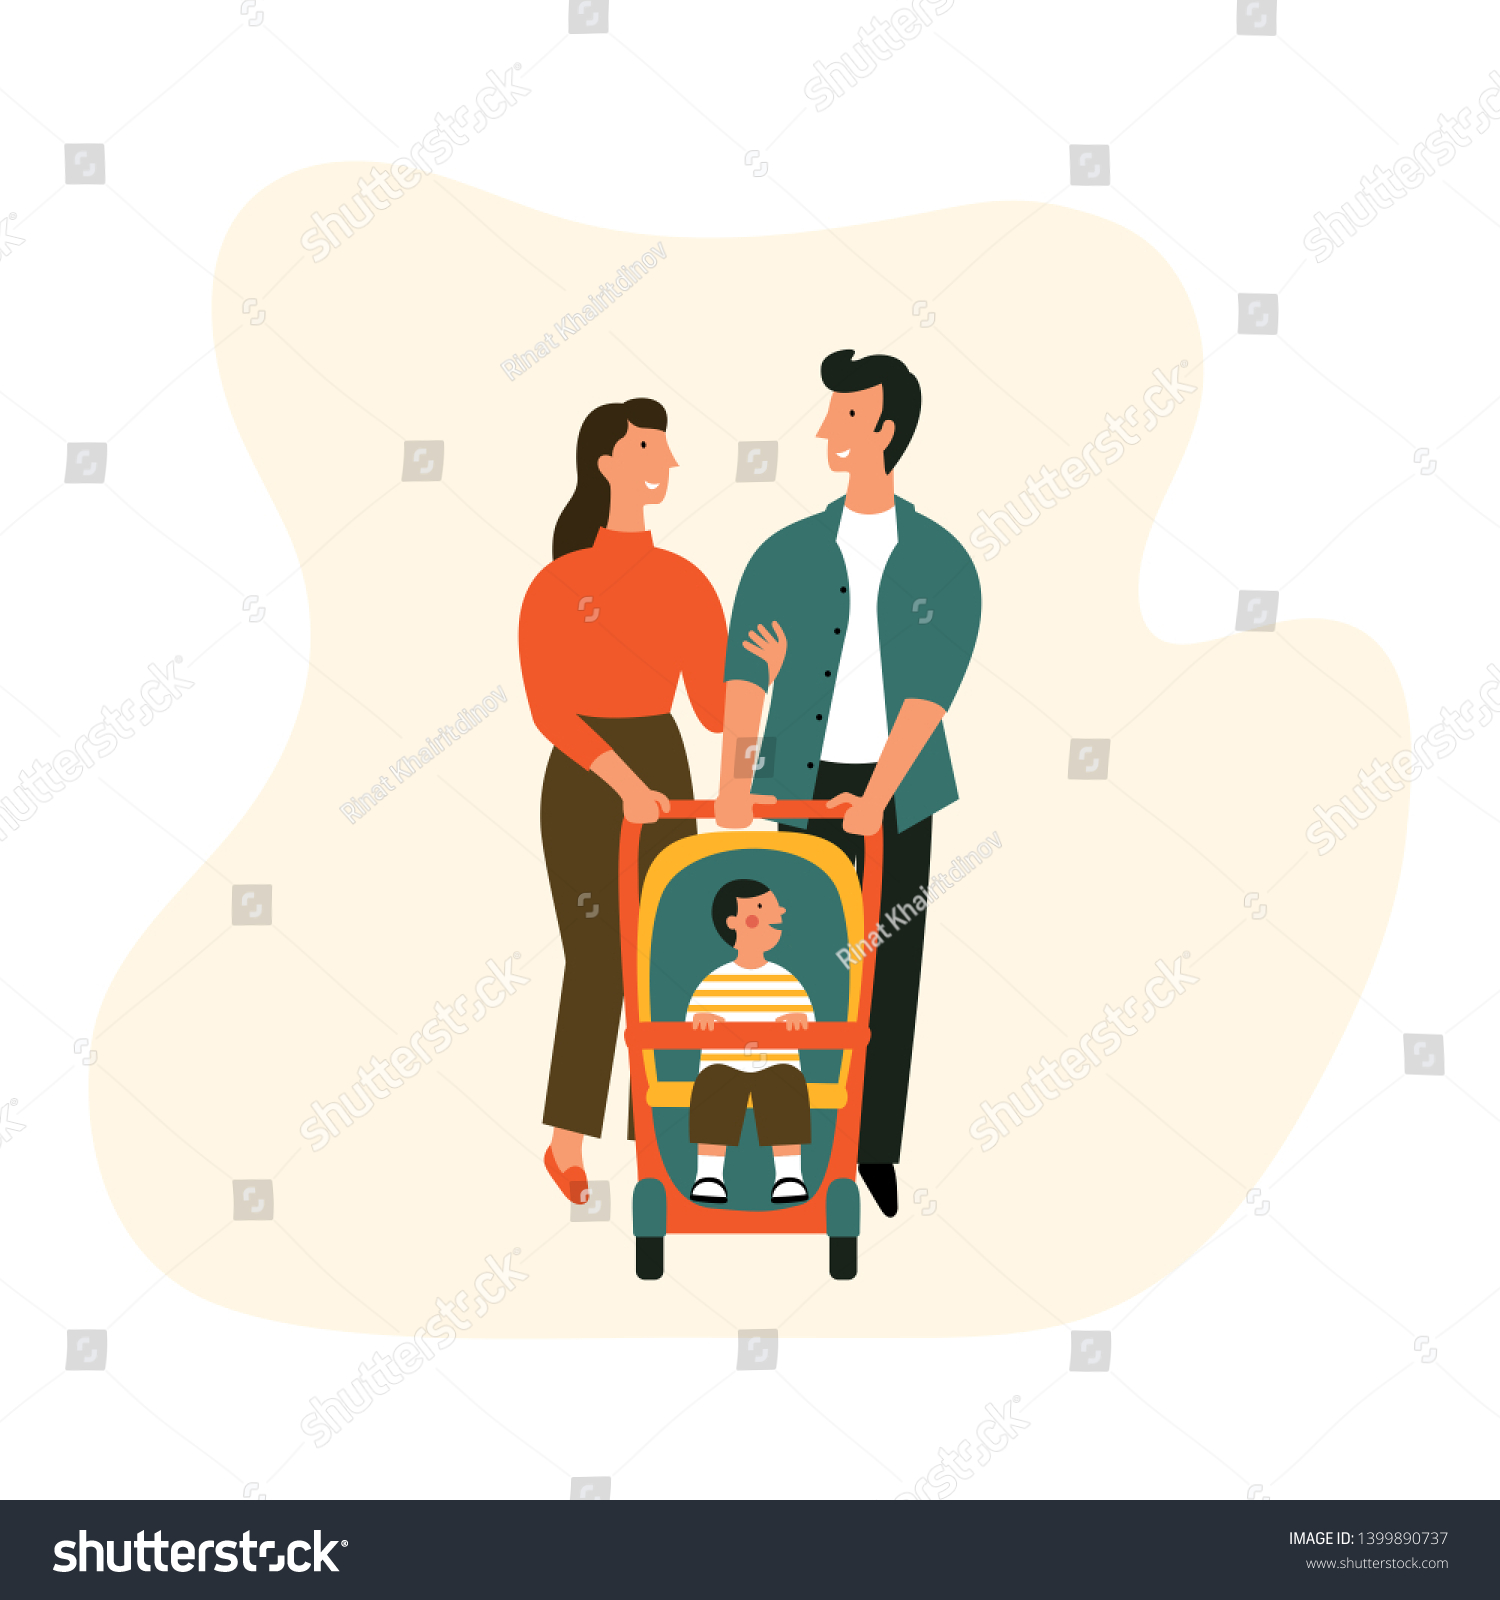 happy family baby stroller